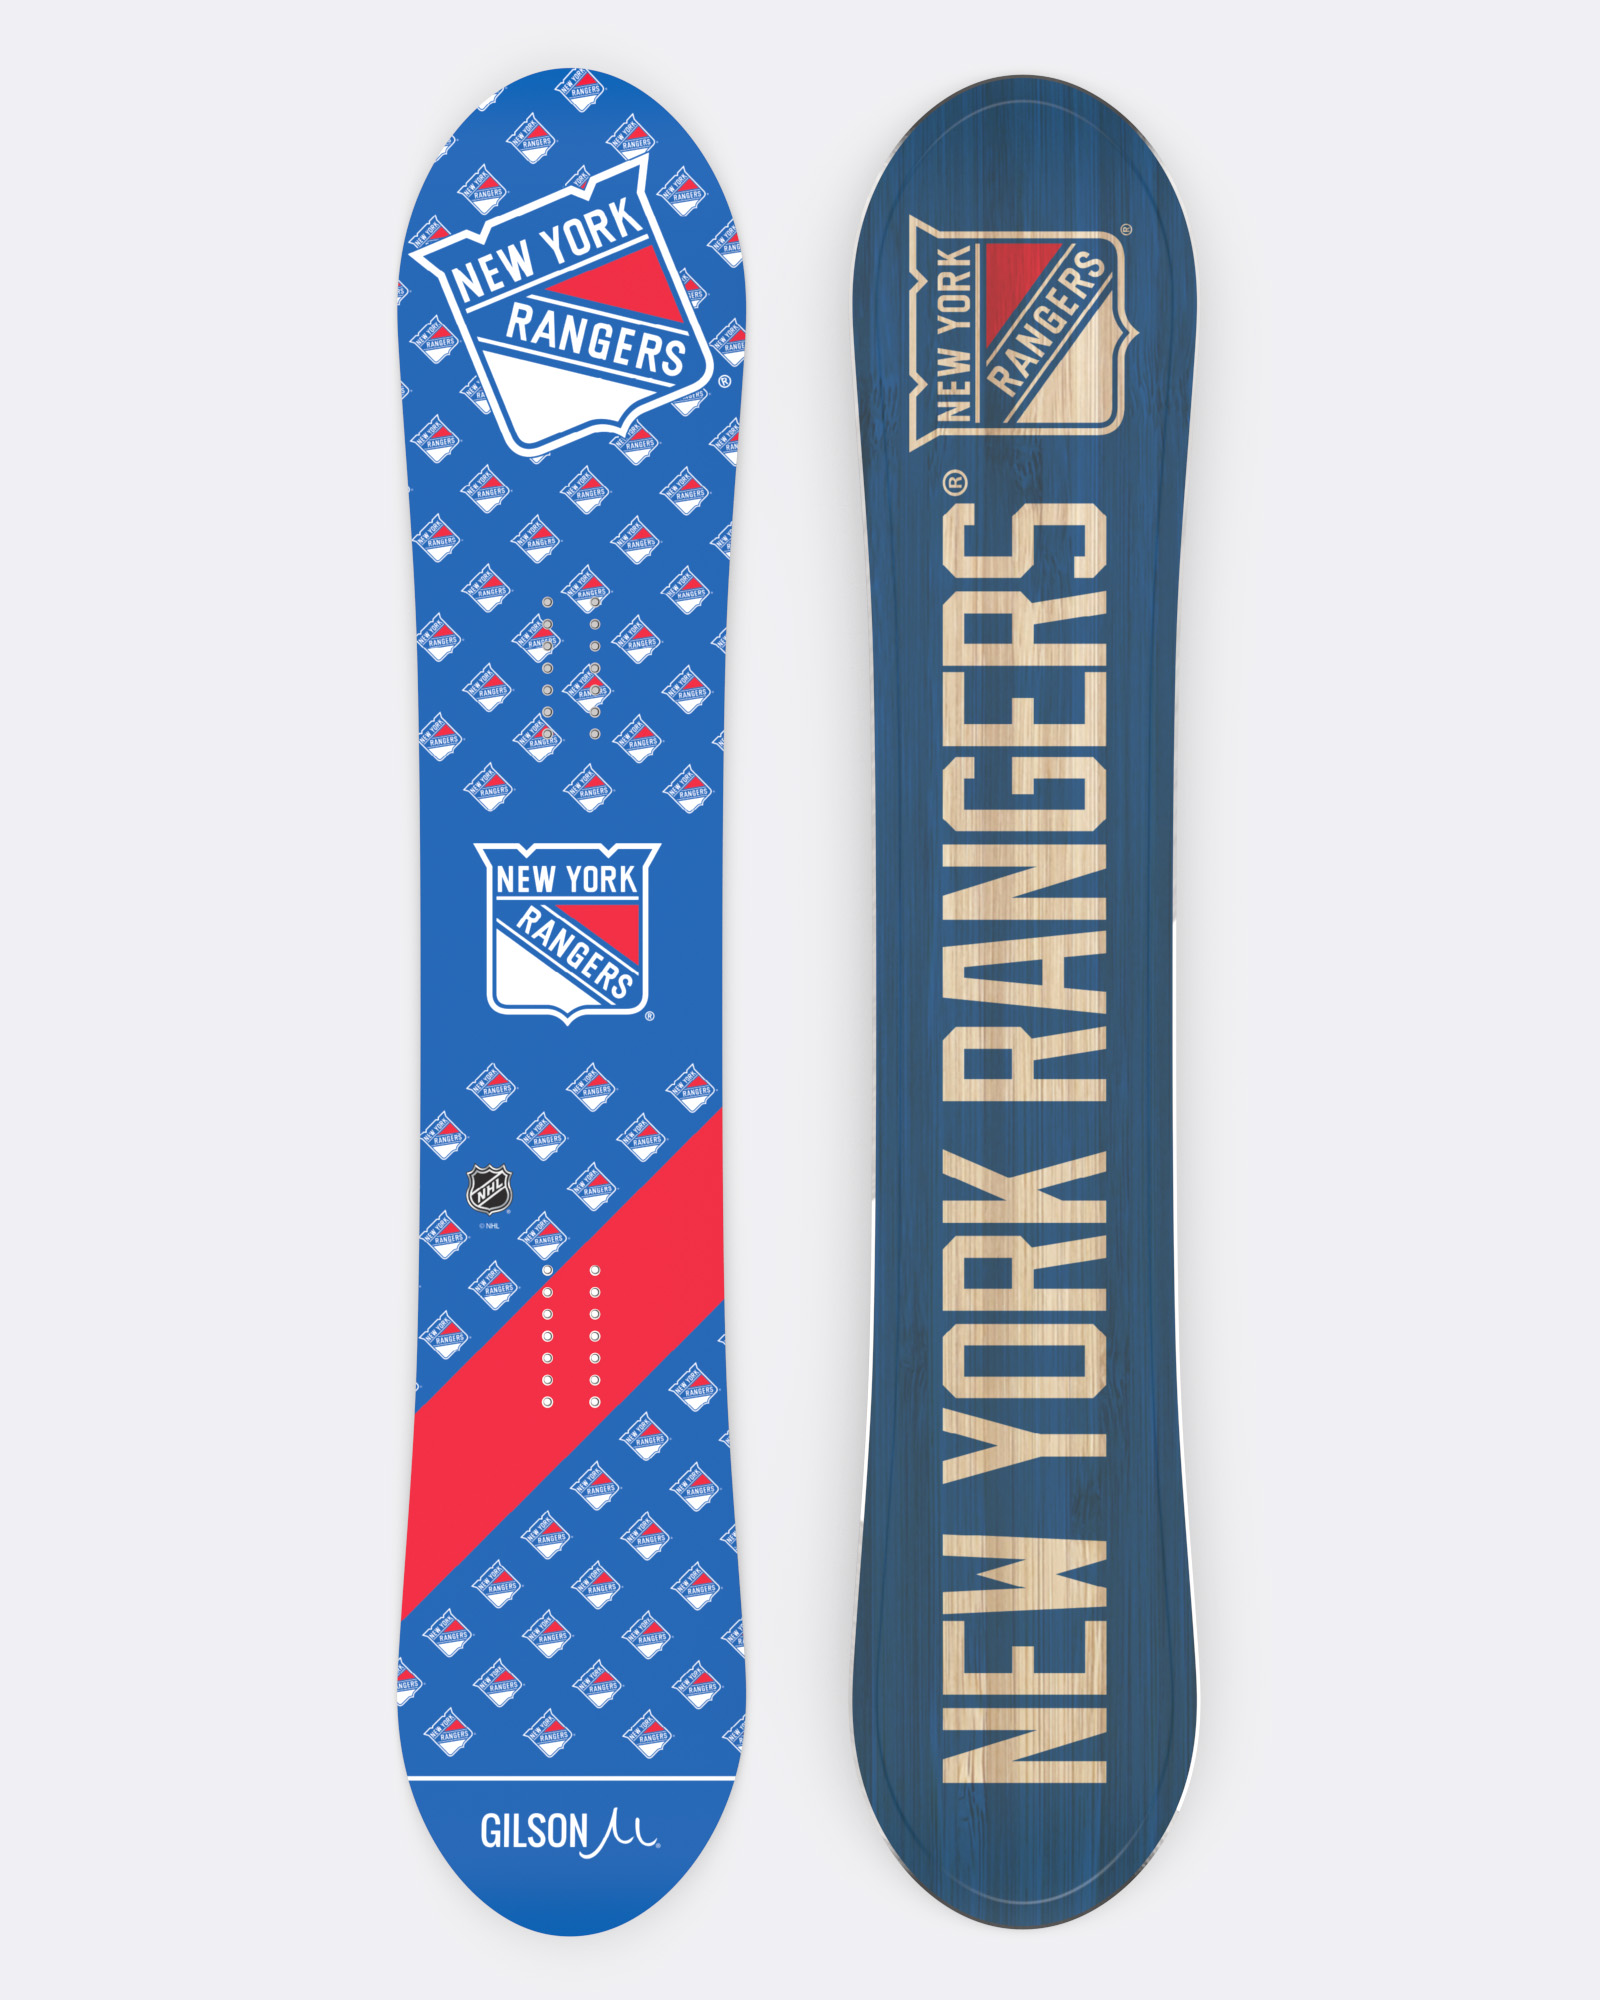 New York Rangers graphics